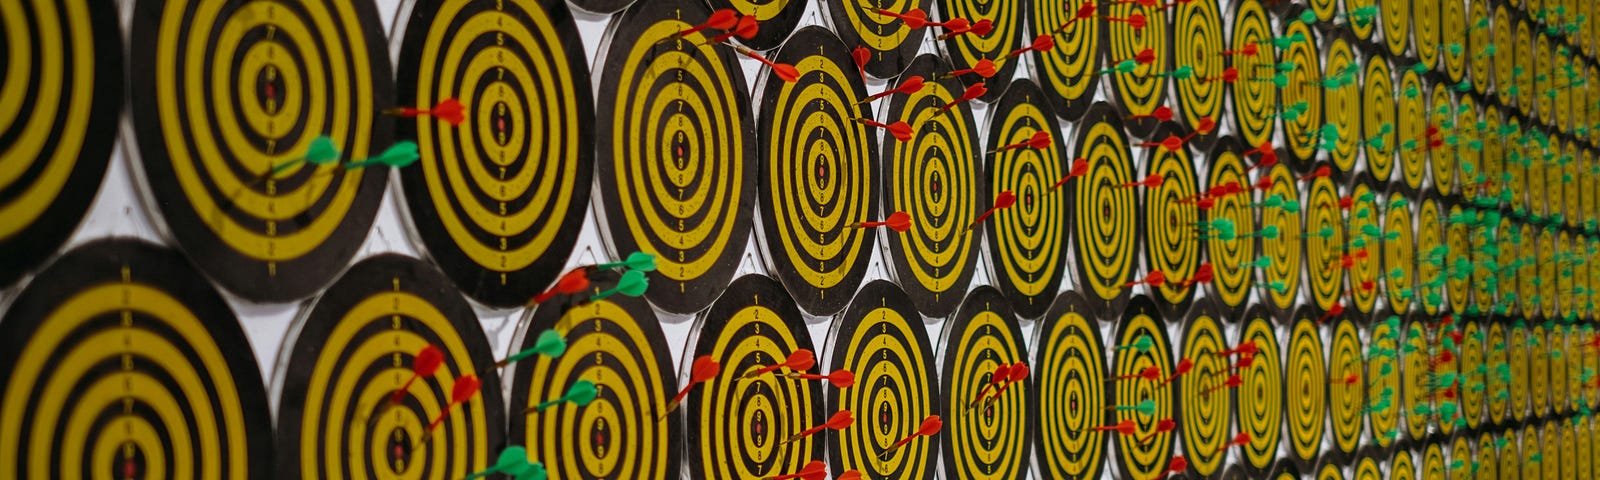 Hundreds of dart boards aligned in several rows.